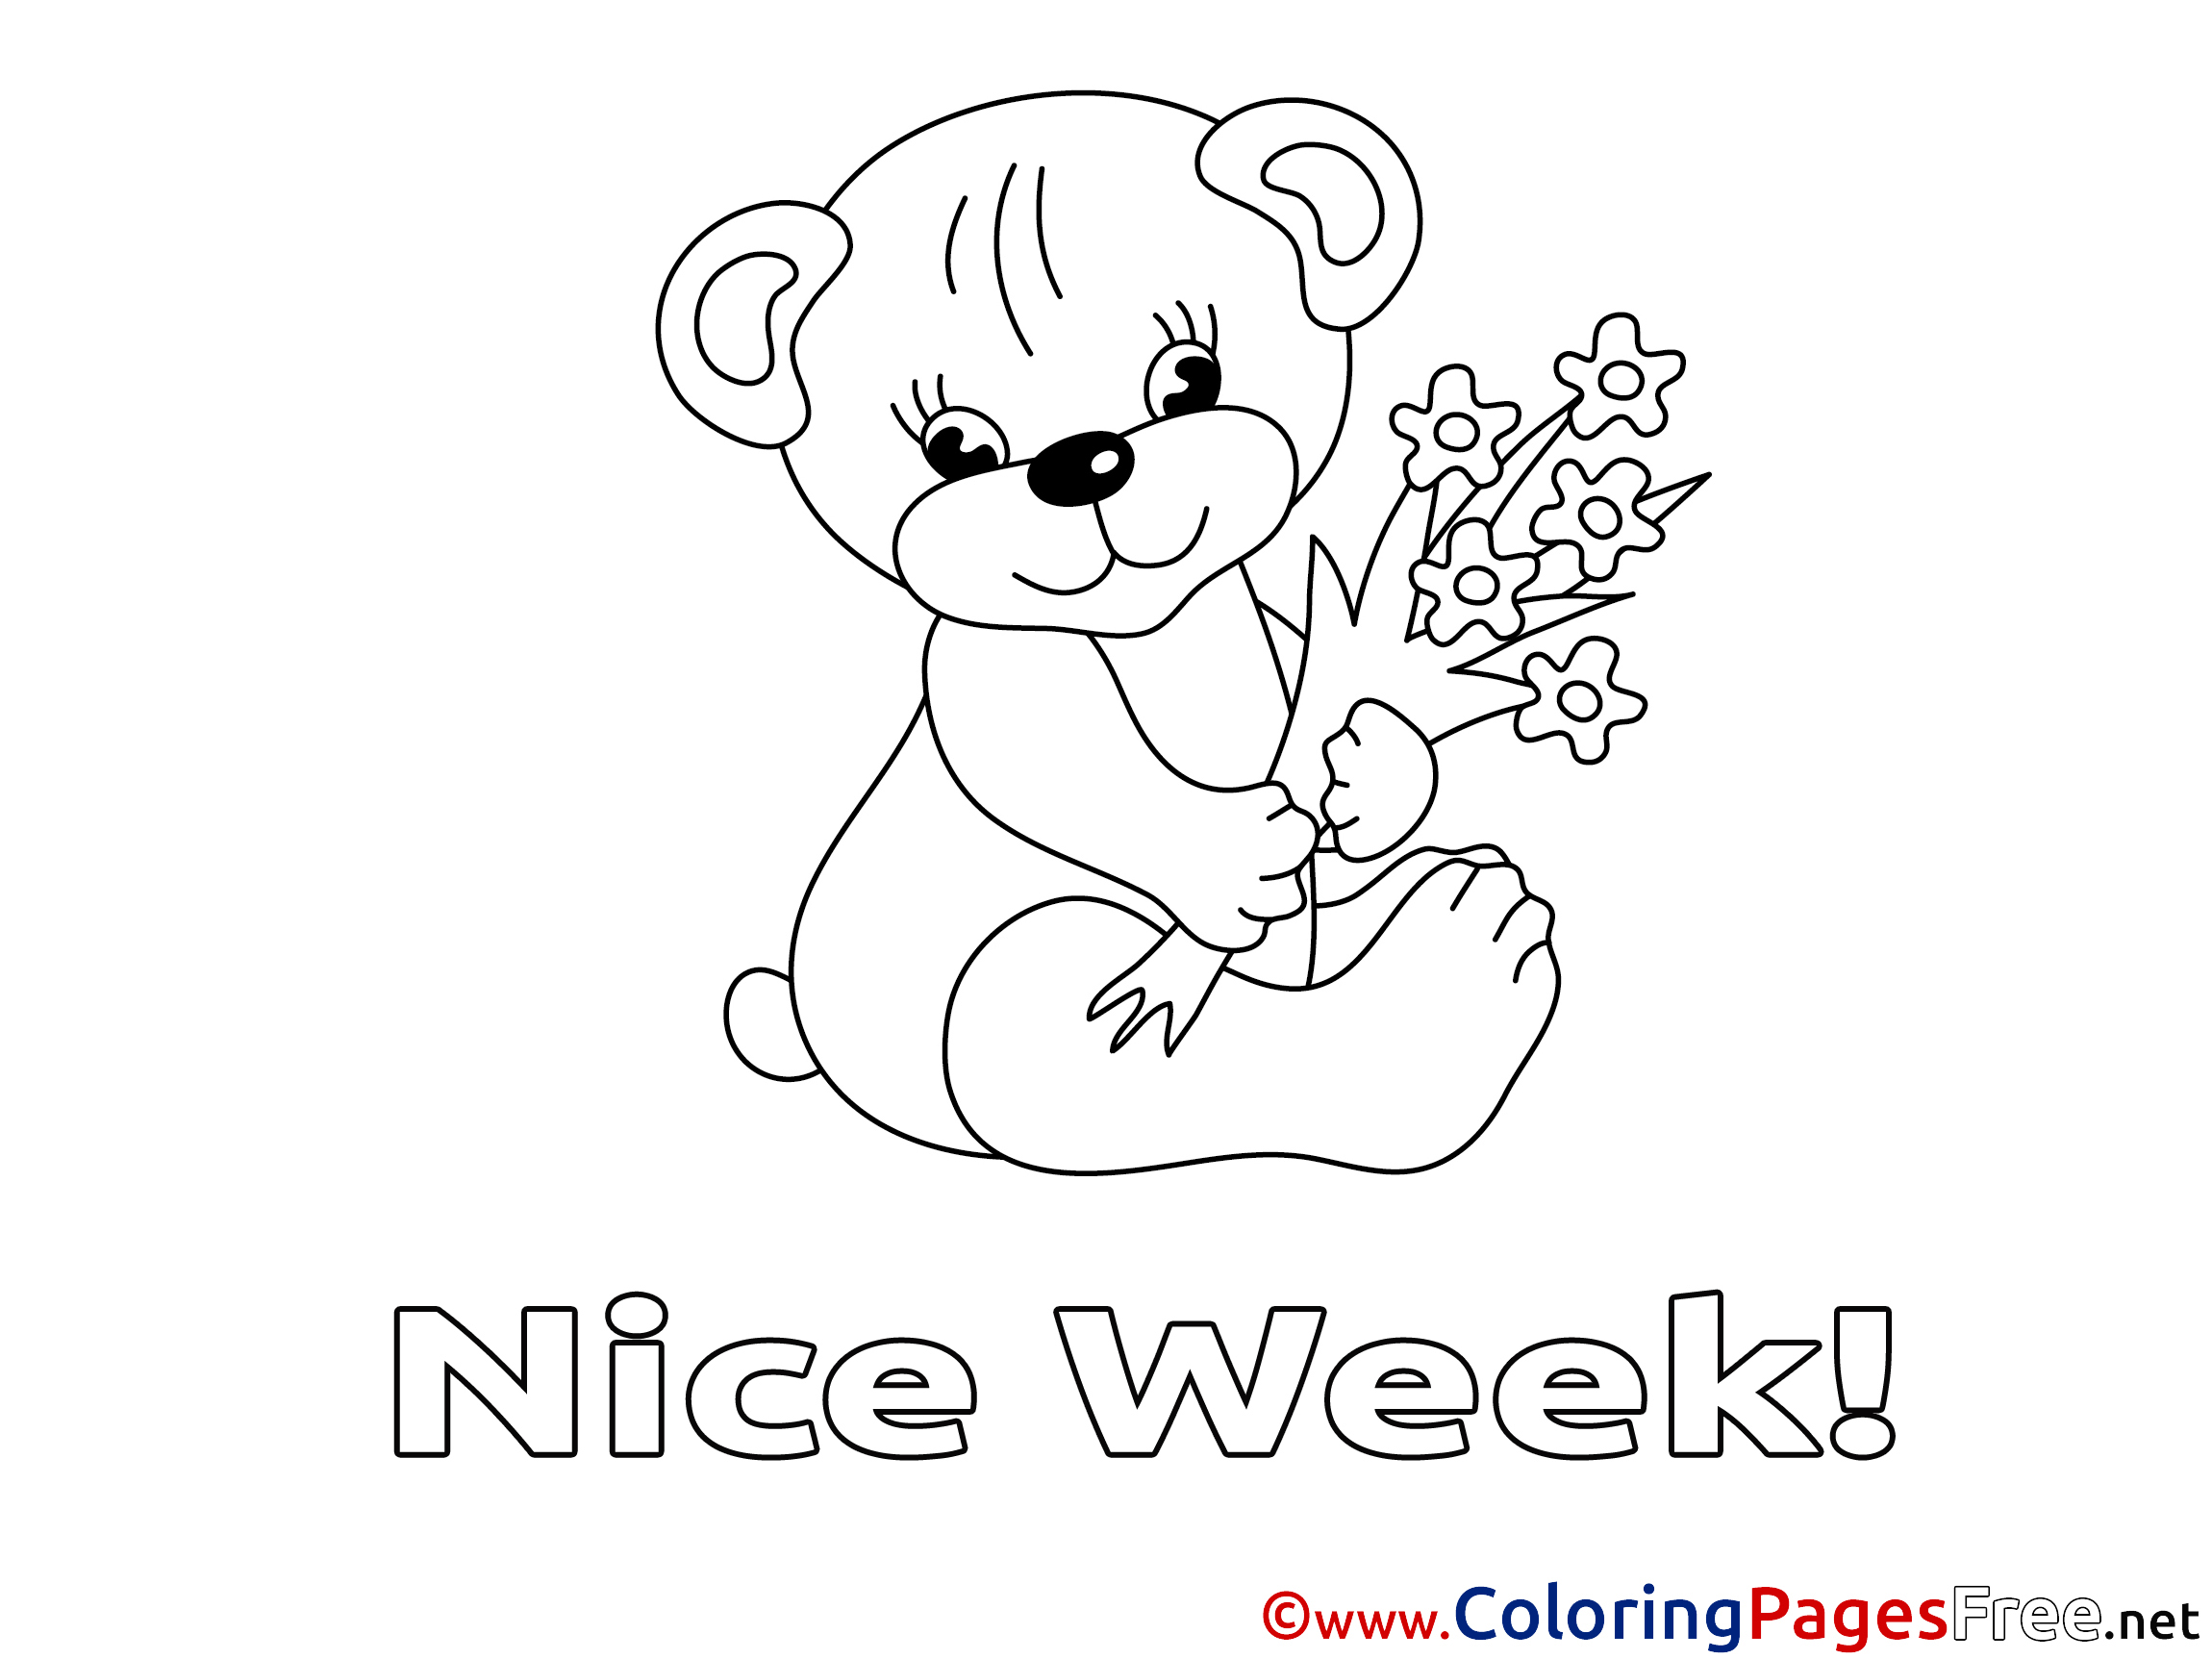 Bear Nice Week Coloring Pages download